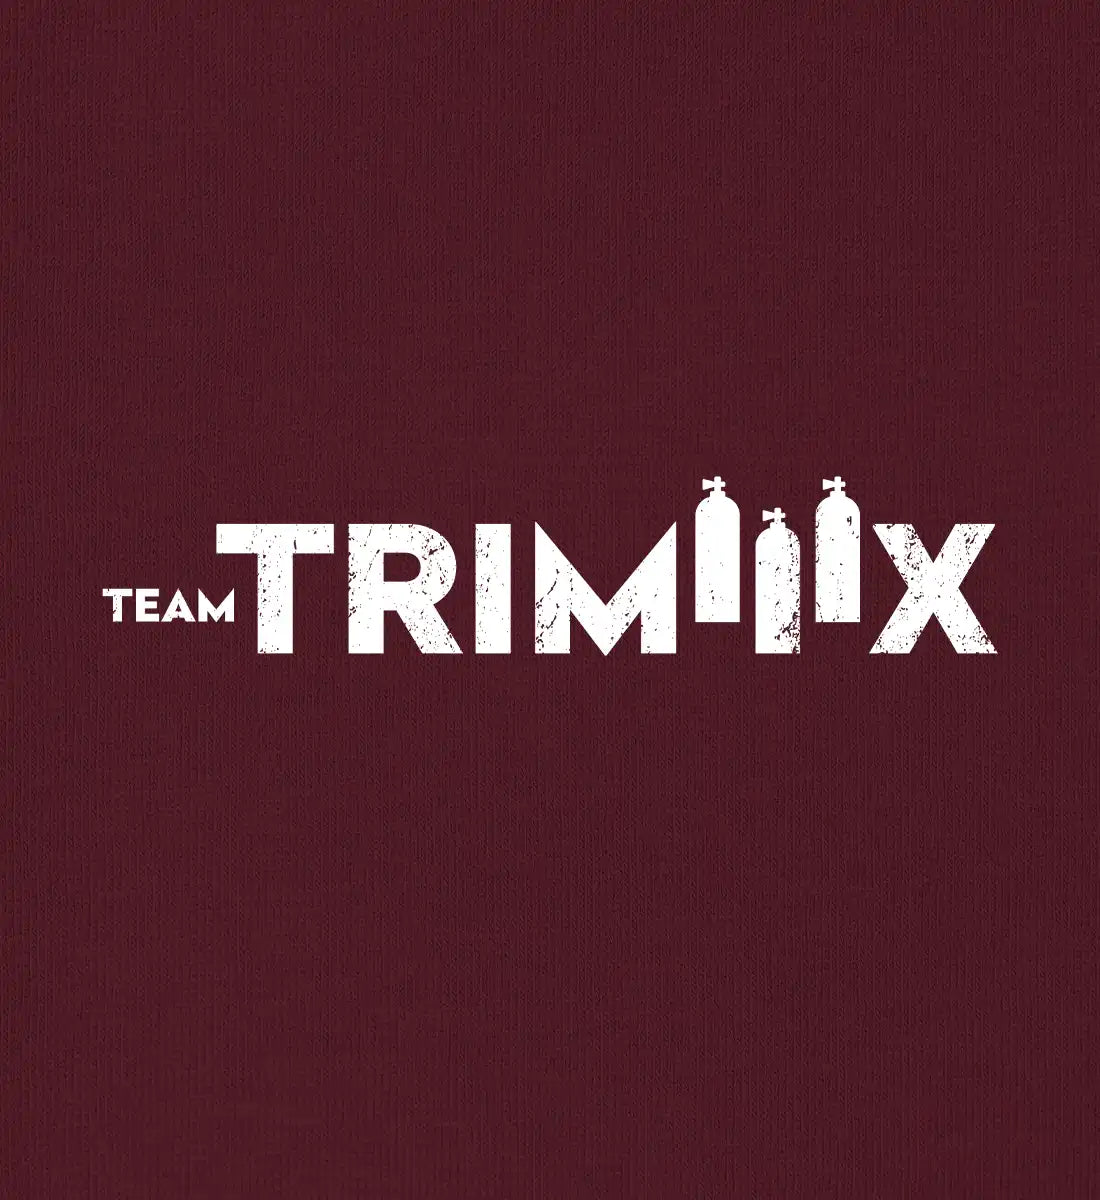 Team Trimiiix - 100 % Bio Frauen T-Shirt